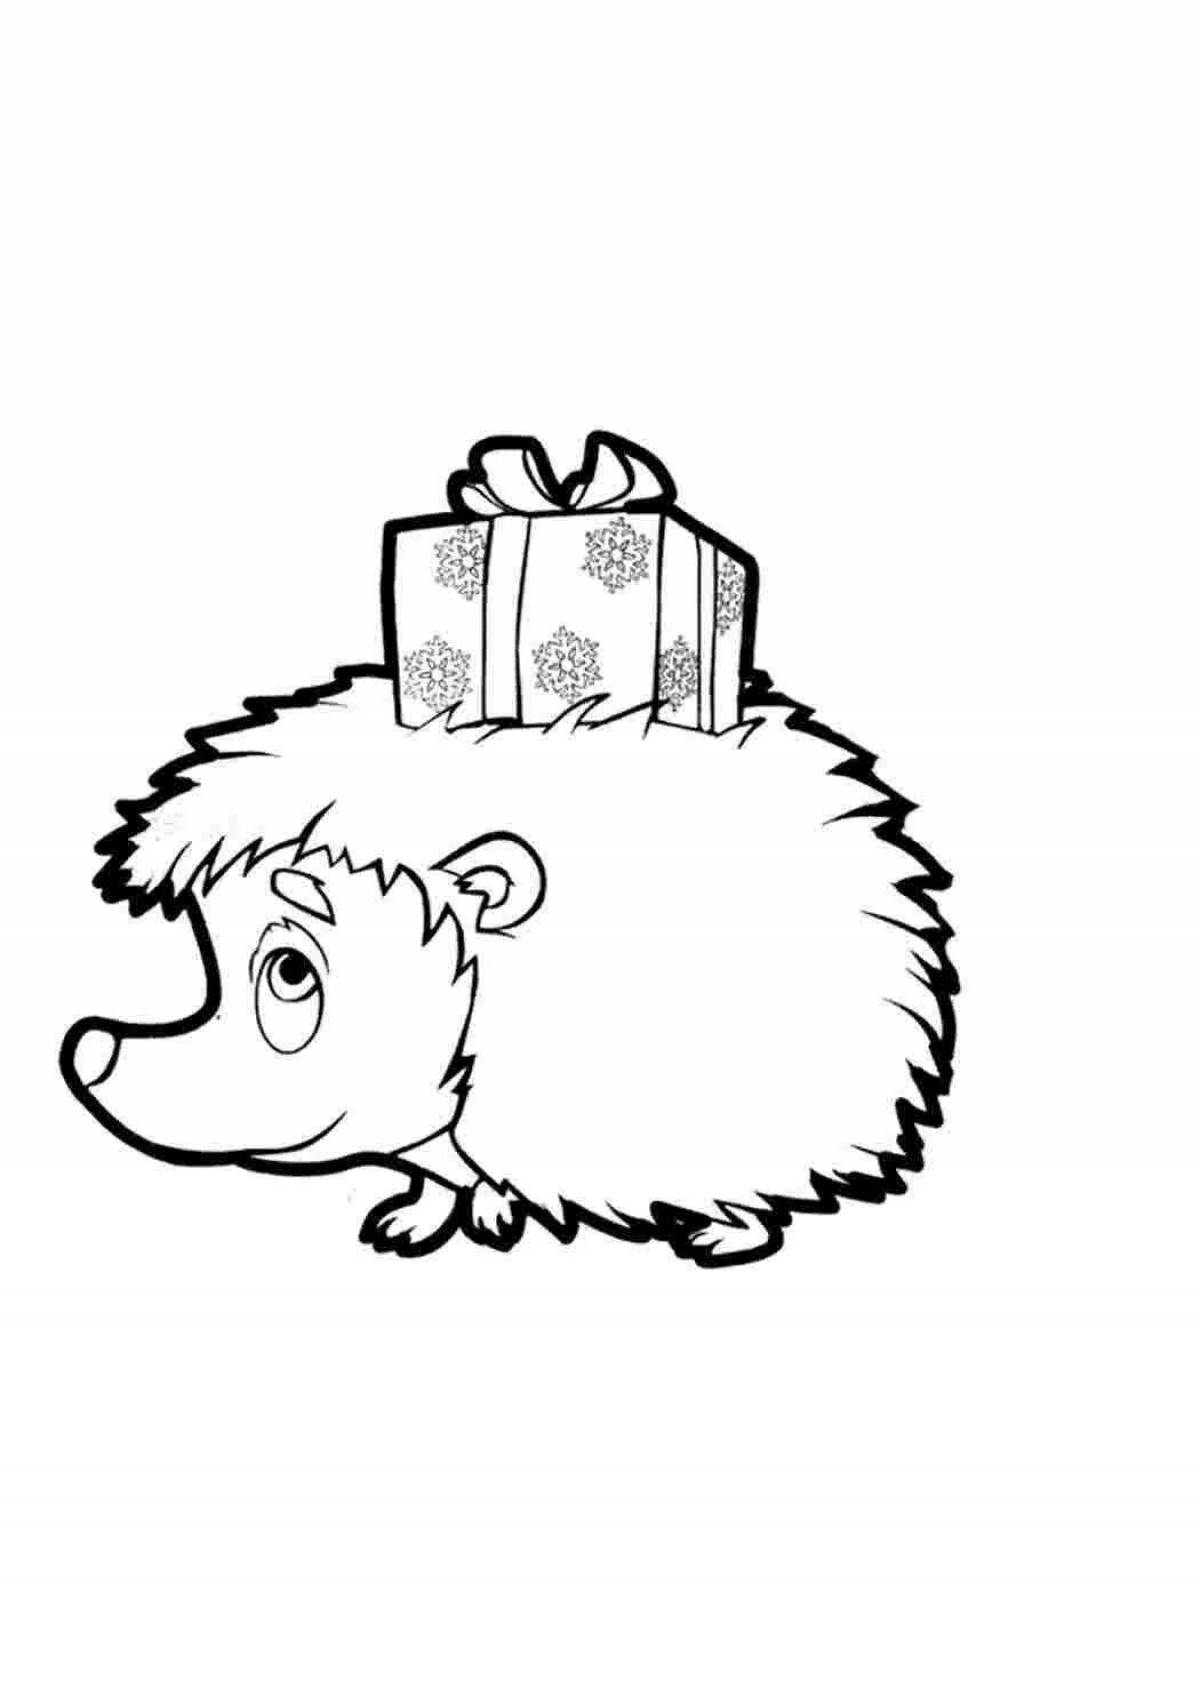 Fancy coloring hedgehog new year